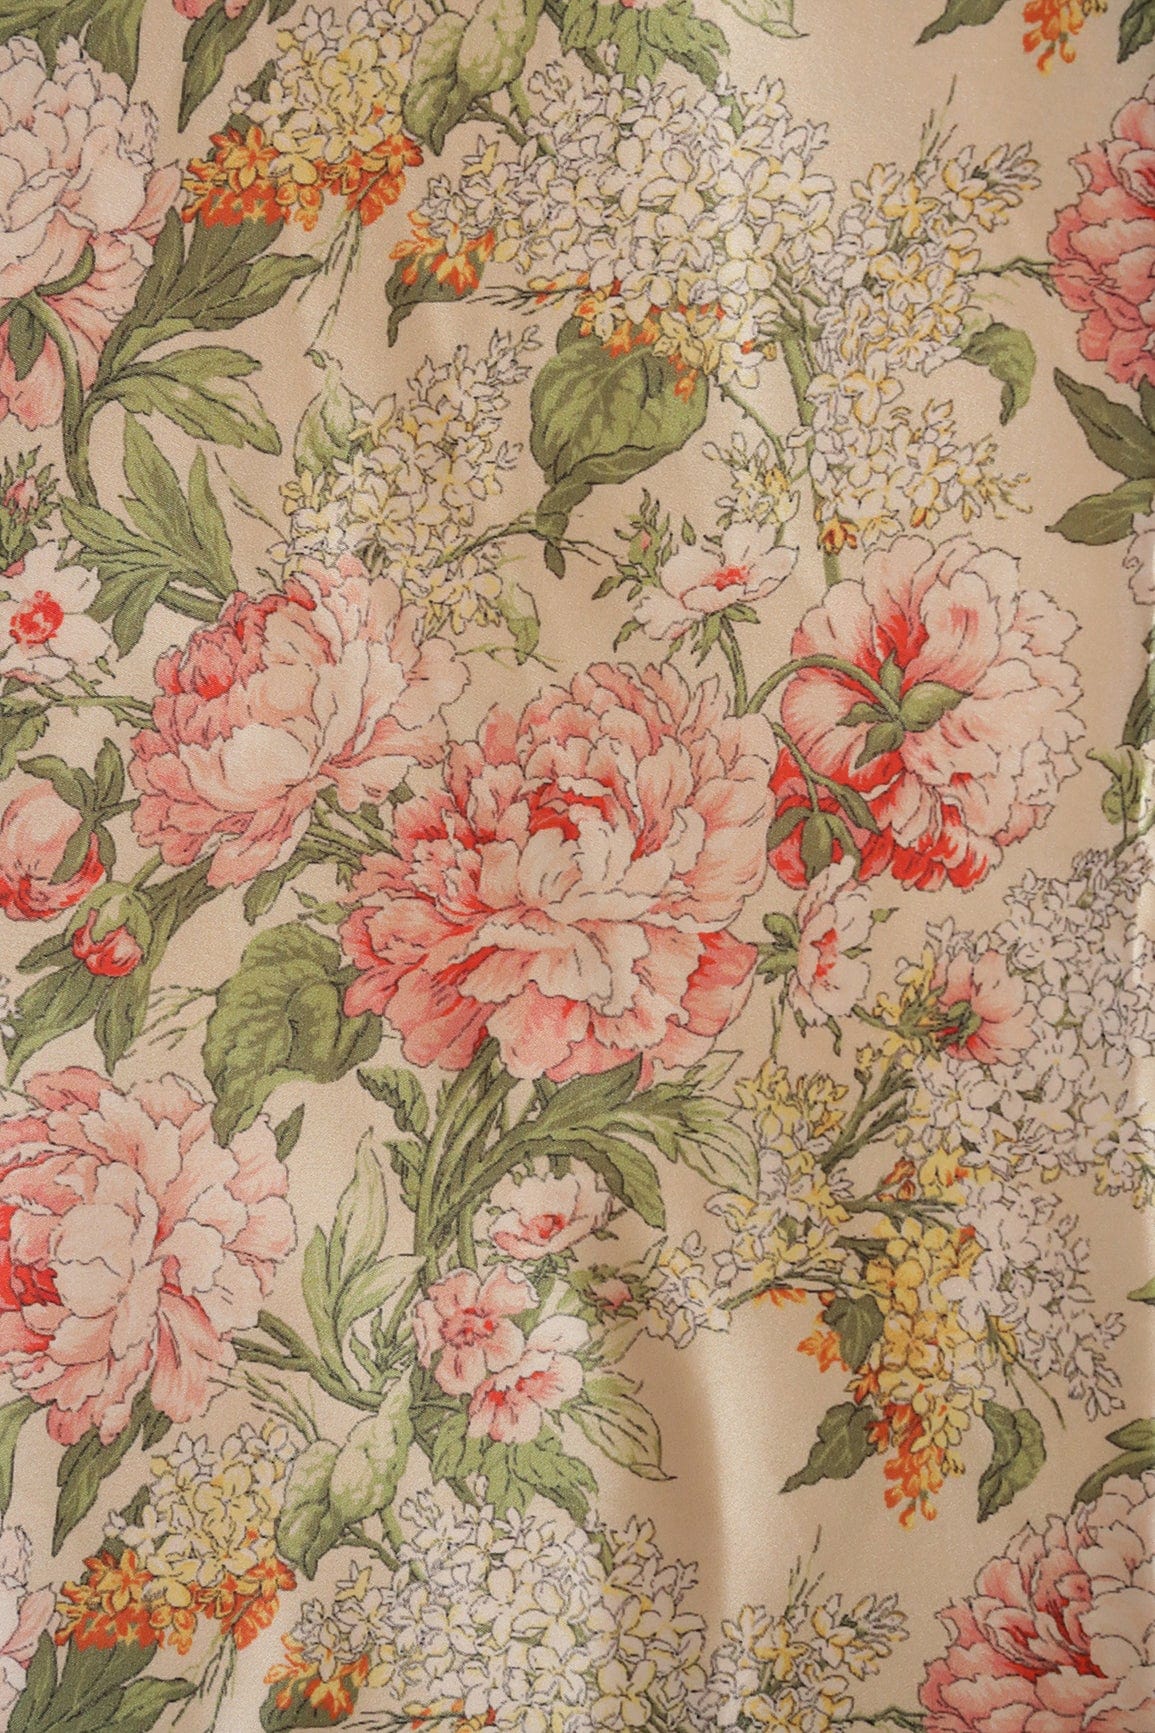 doeraa Prints Beautiful Multi Color Floral Pattern Digital Print On Cream Satin Fabric